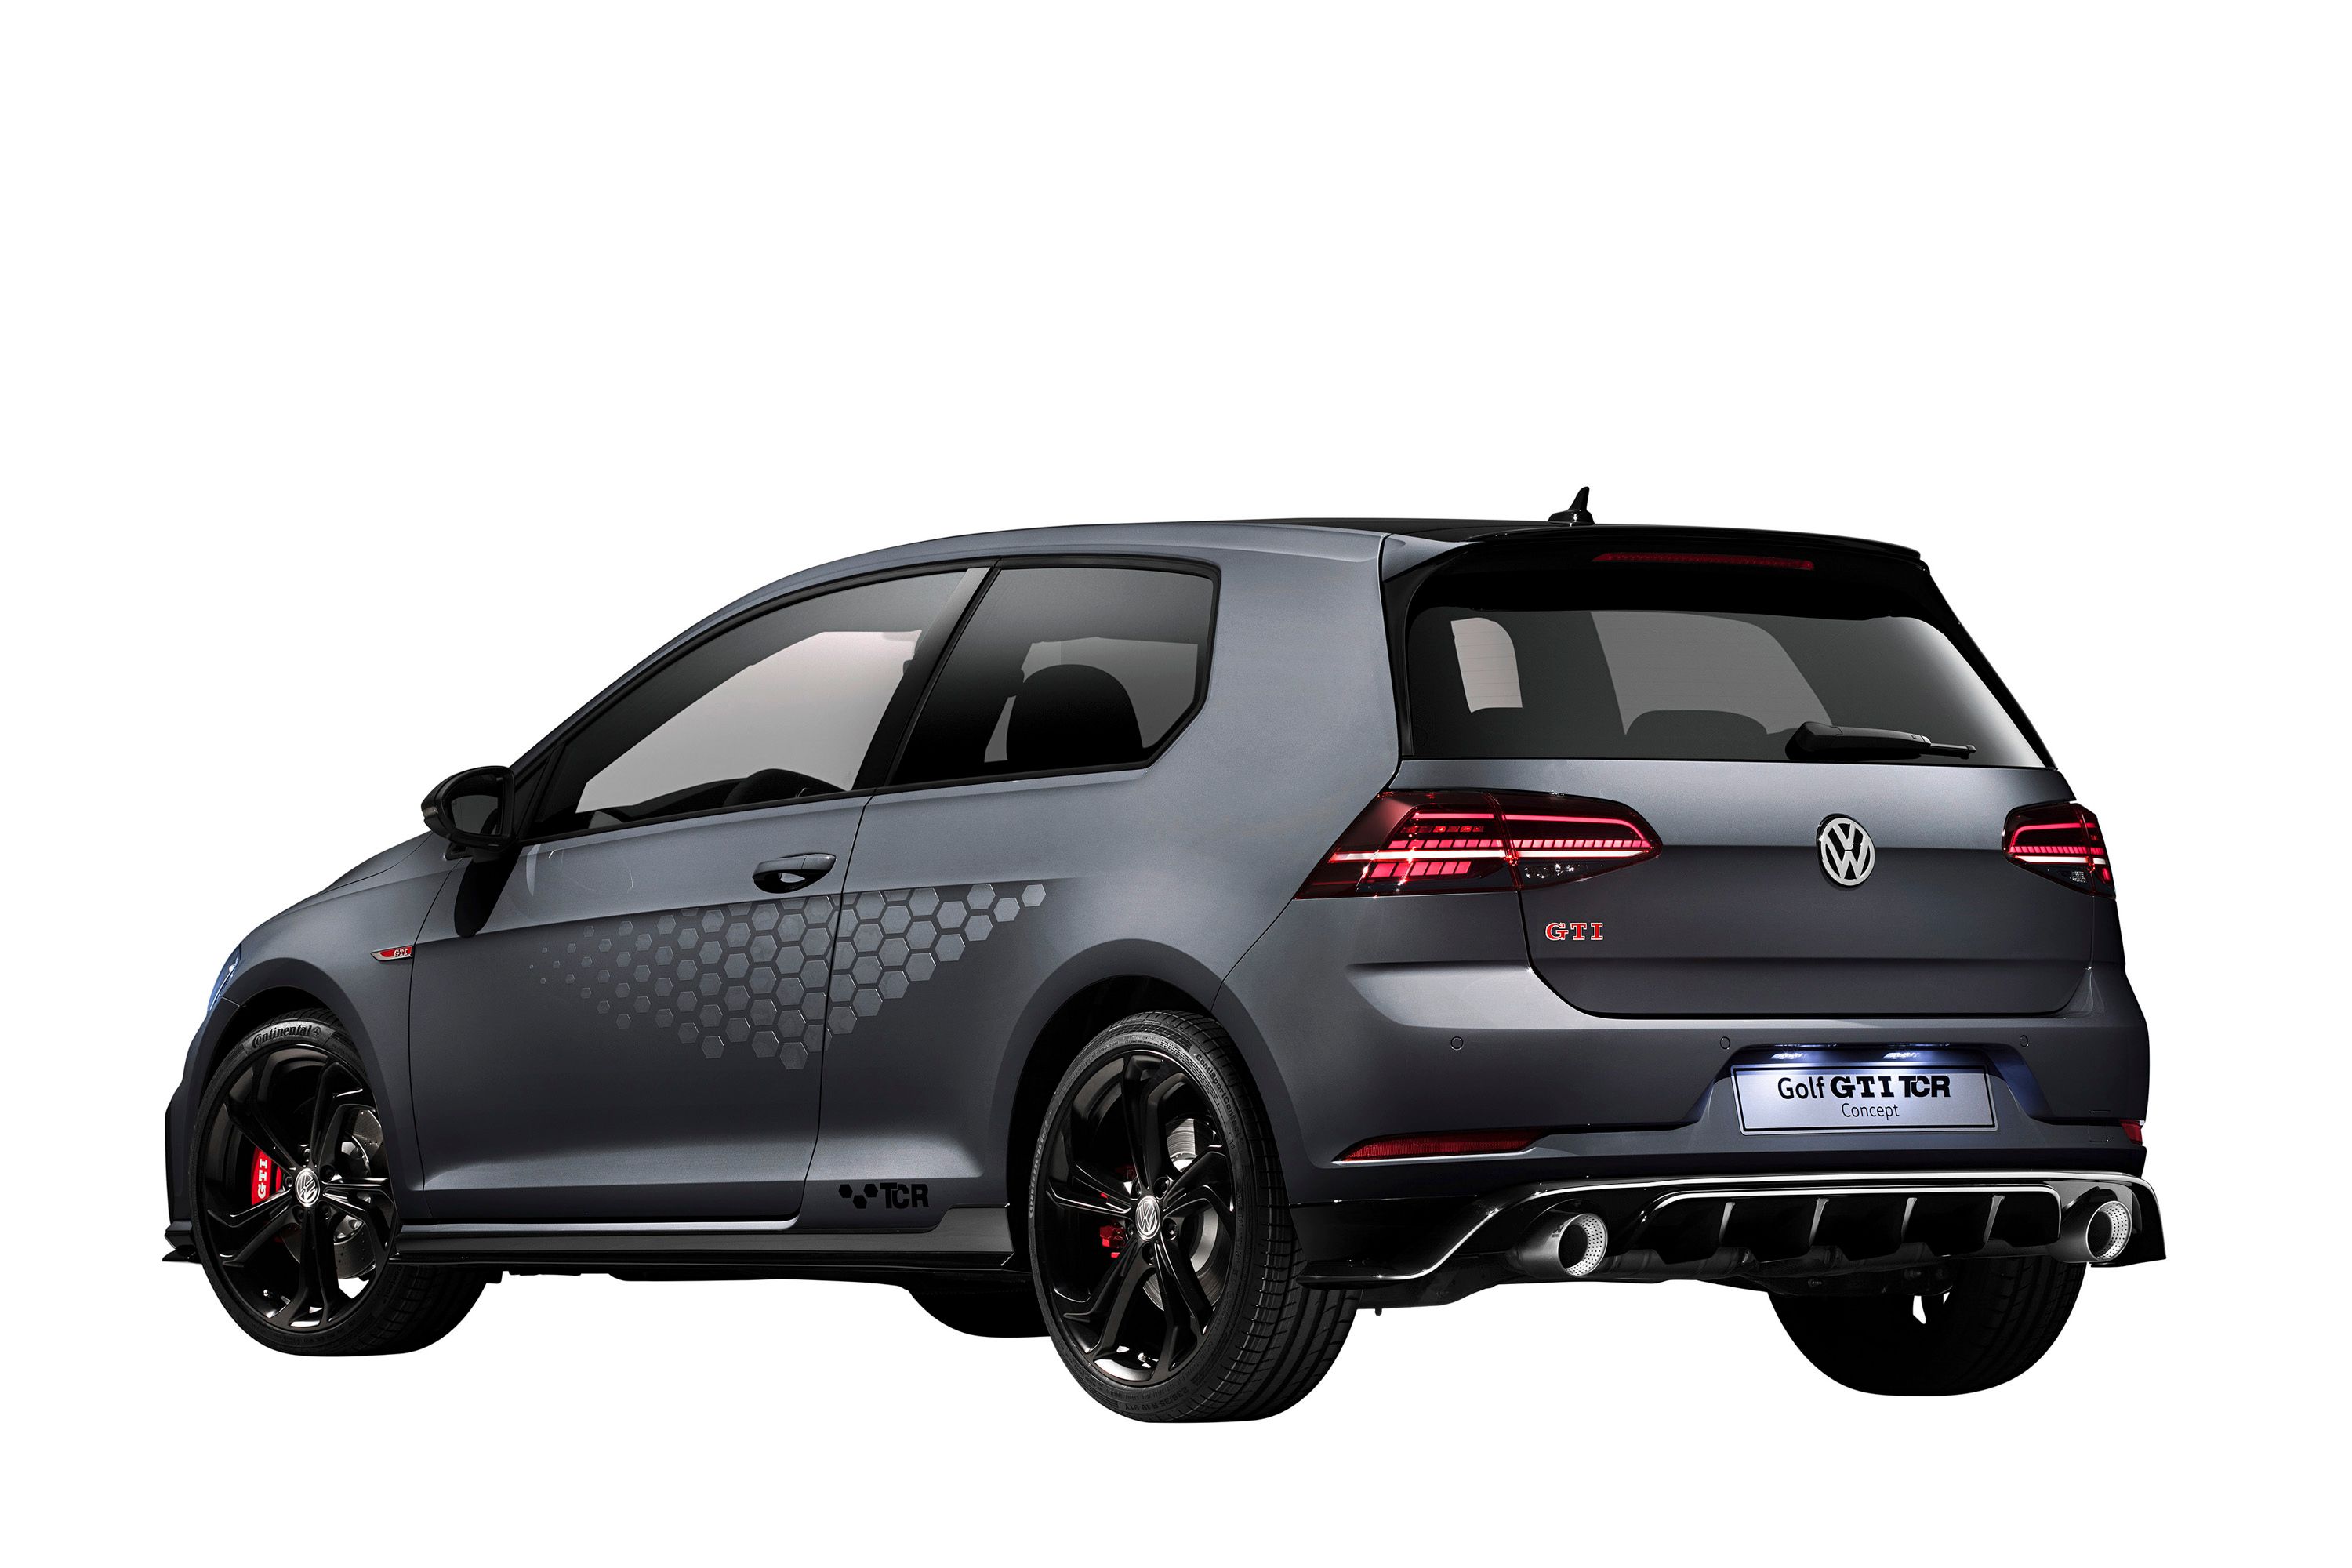 2018 Volkswagen Golf GTI TCR Concept